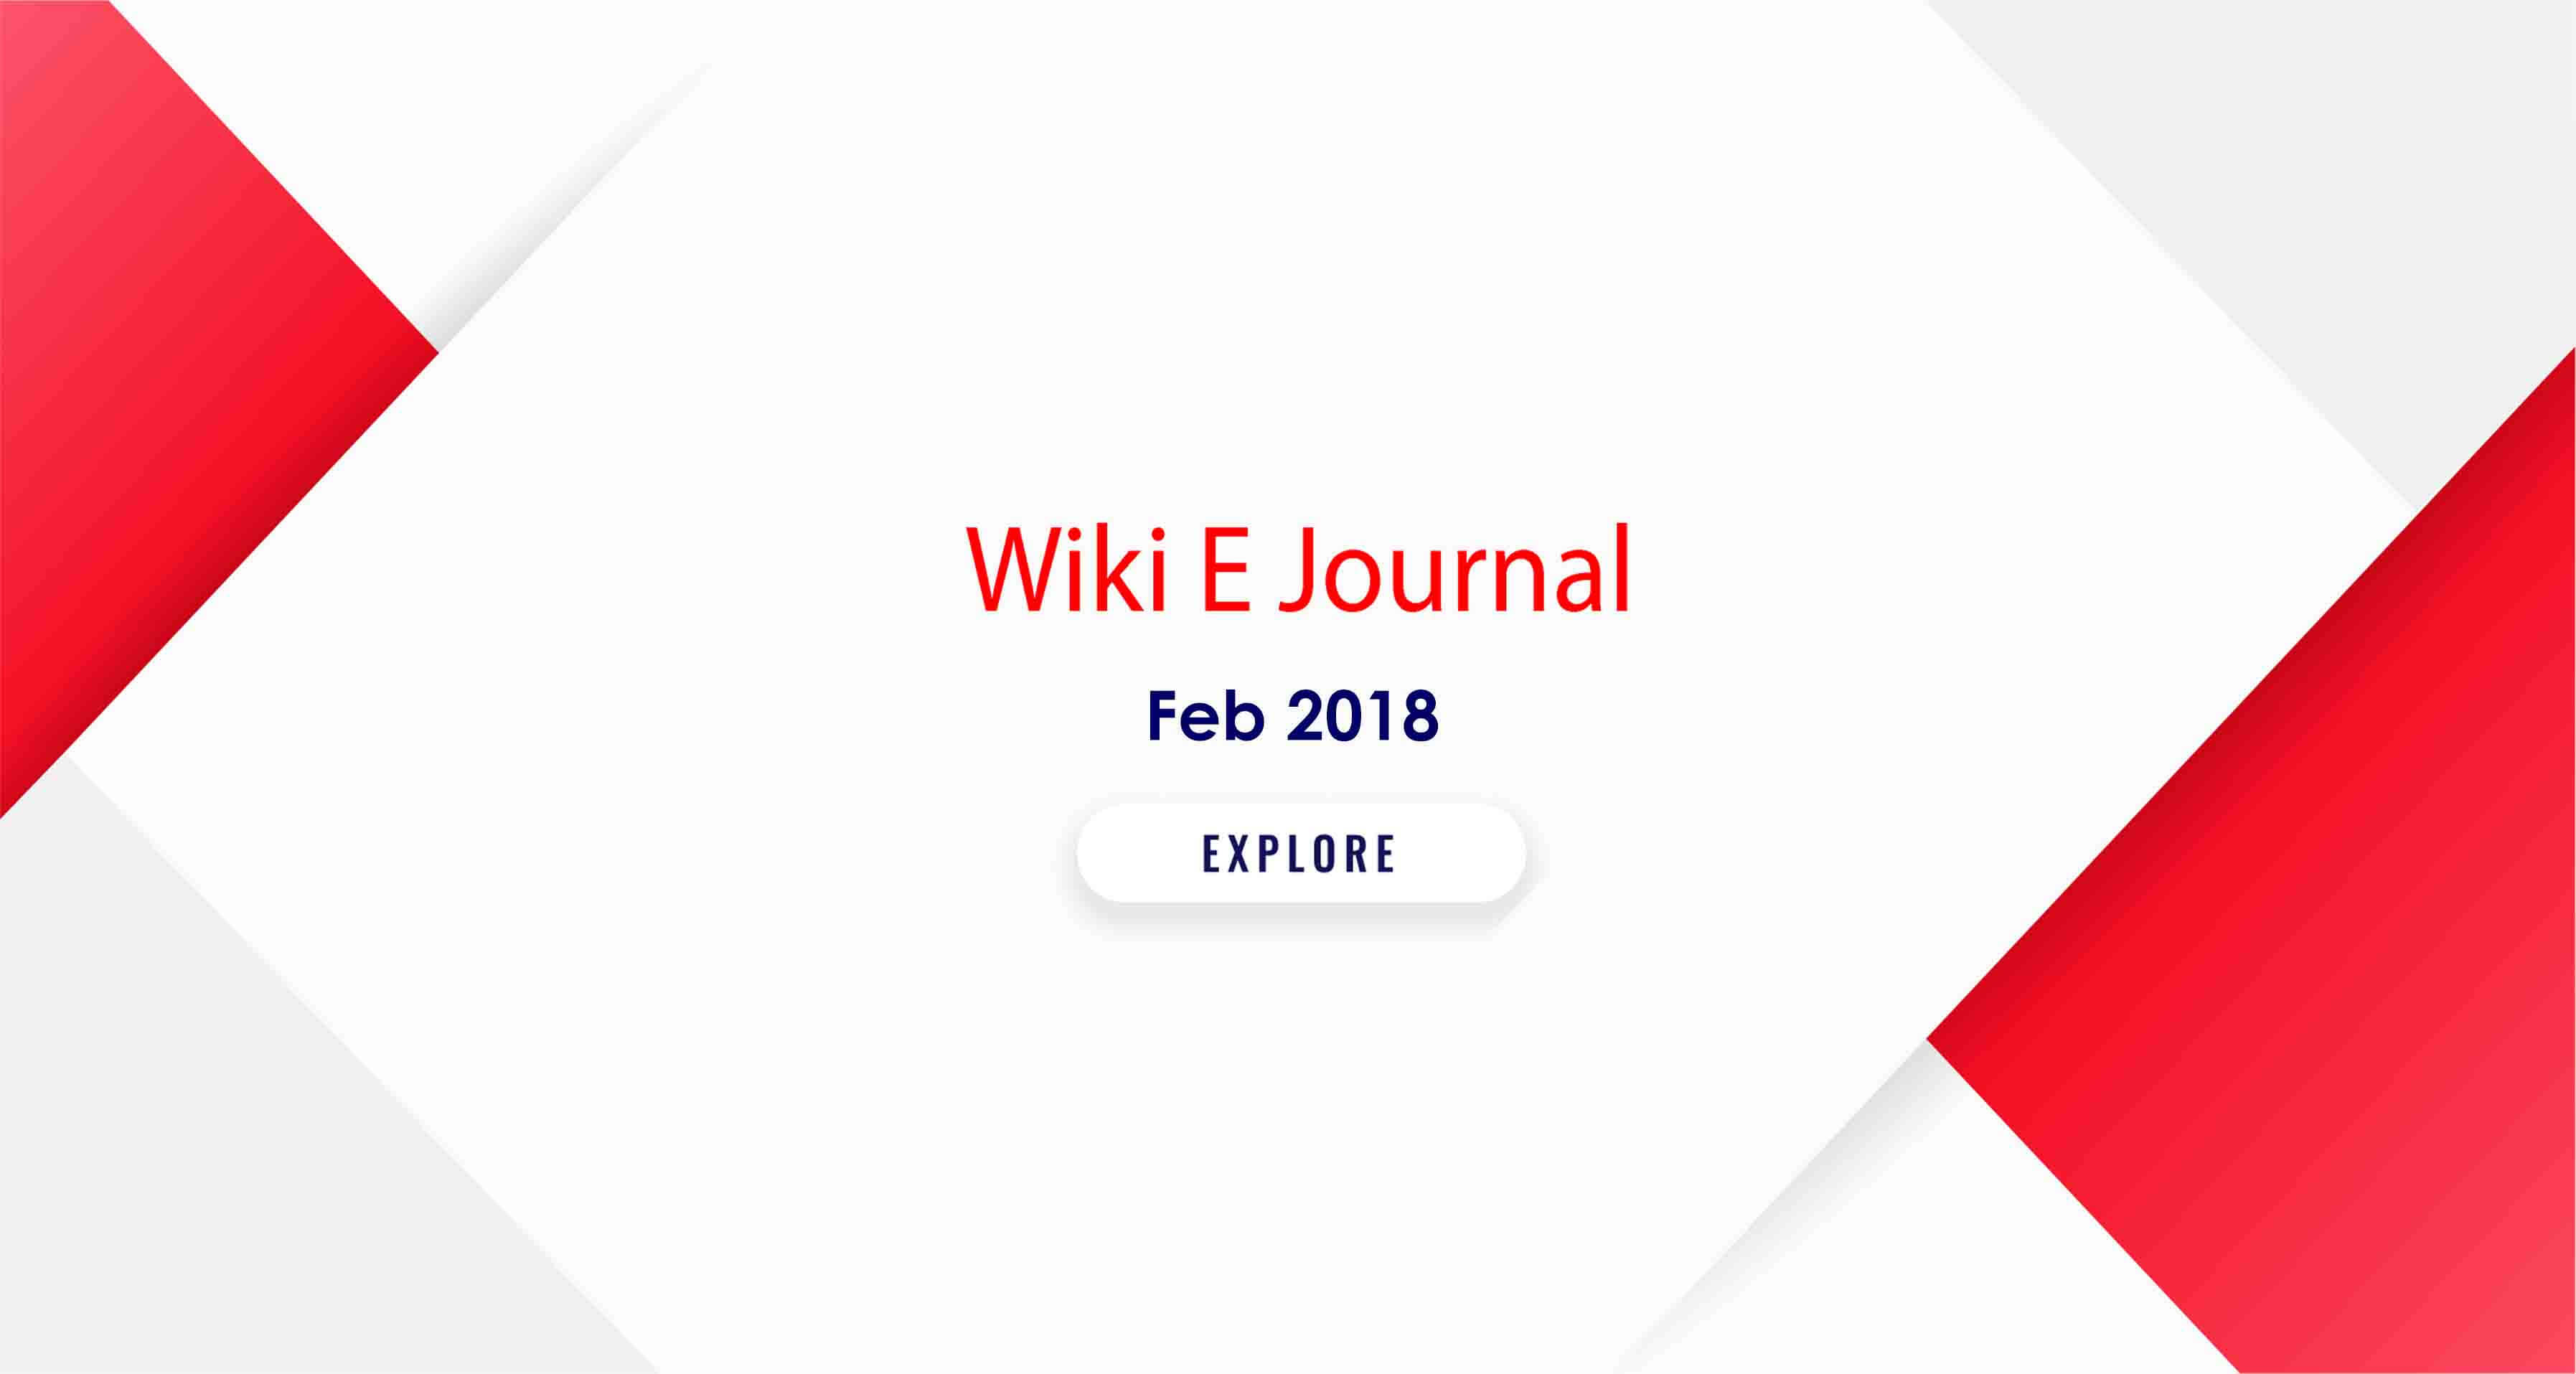 SBS WIKI E Journal FEB 2018